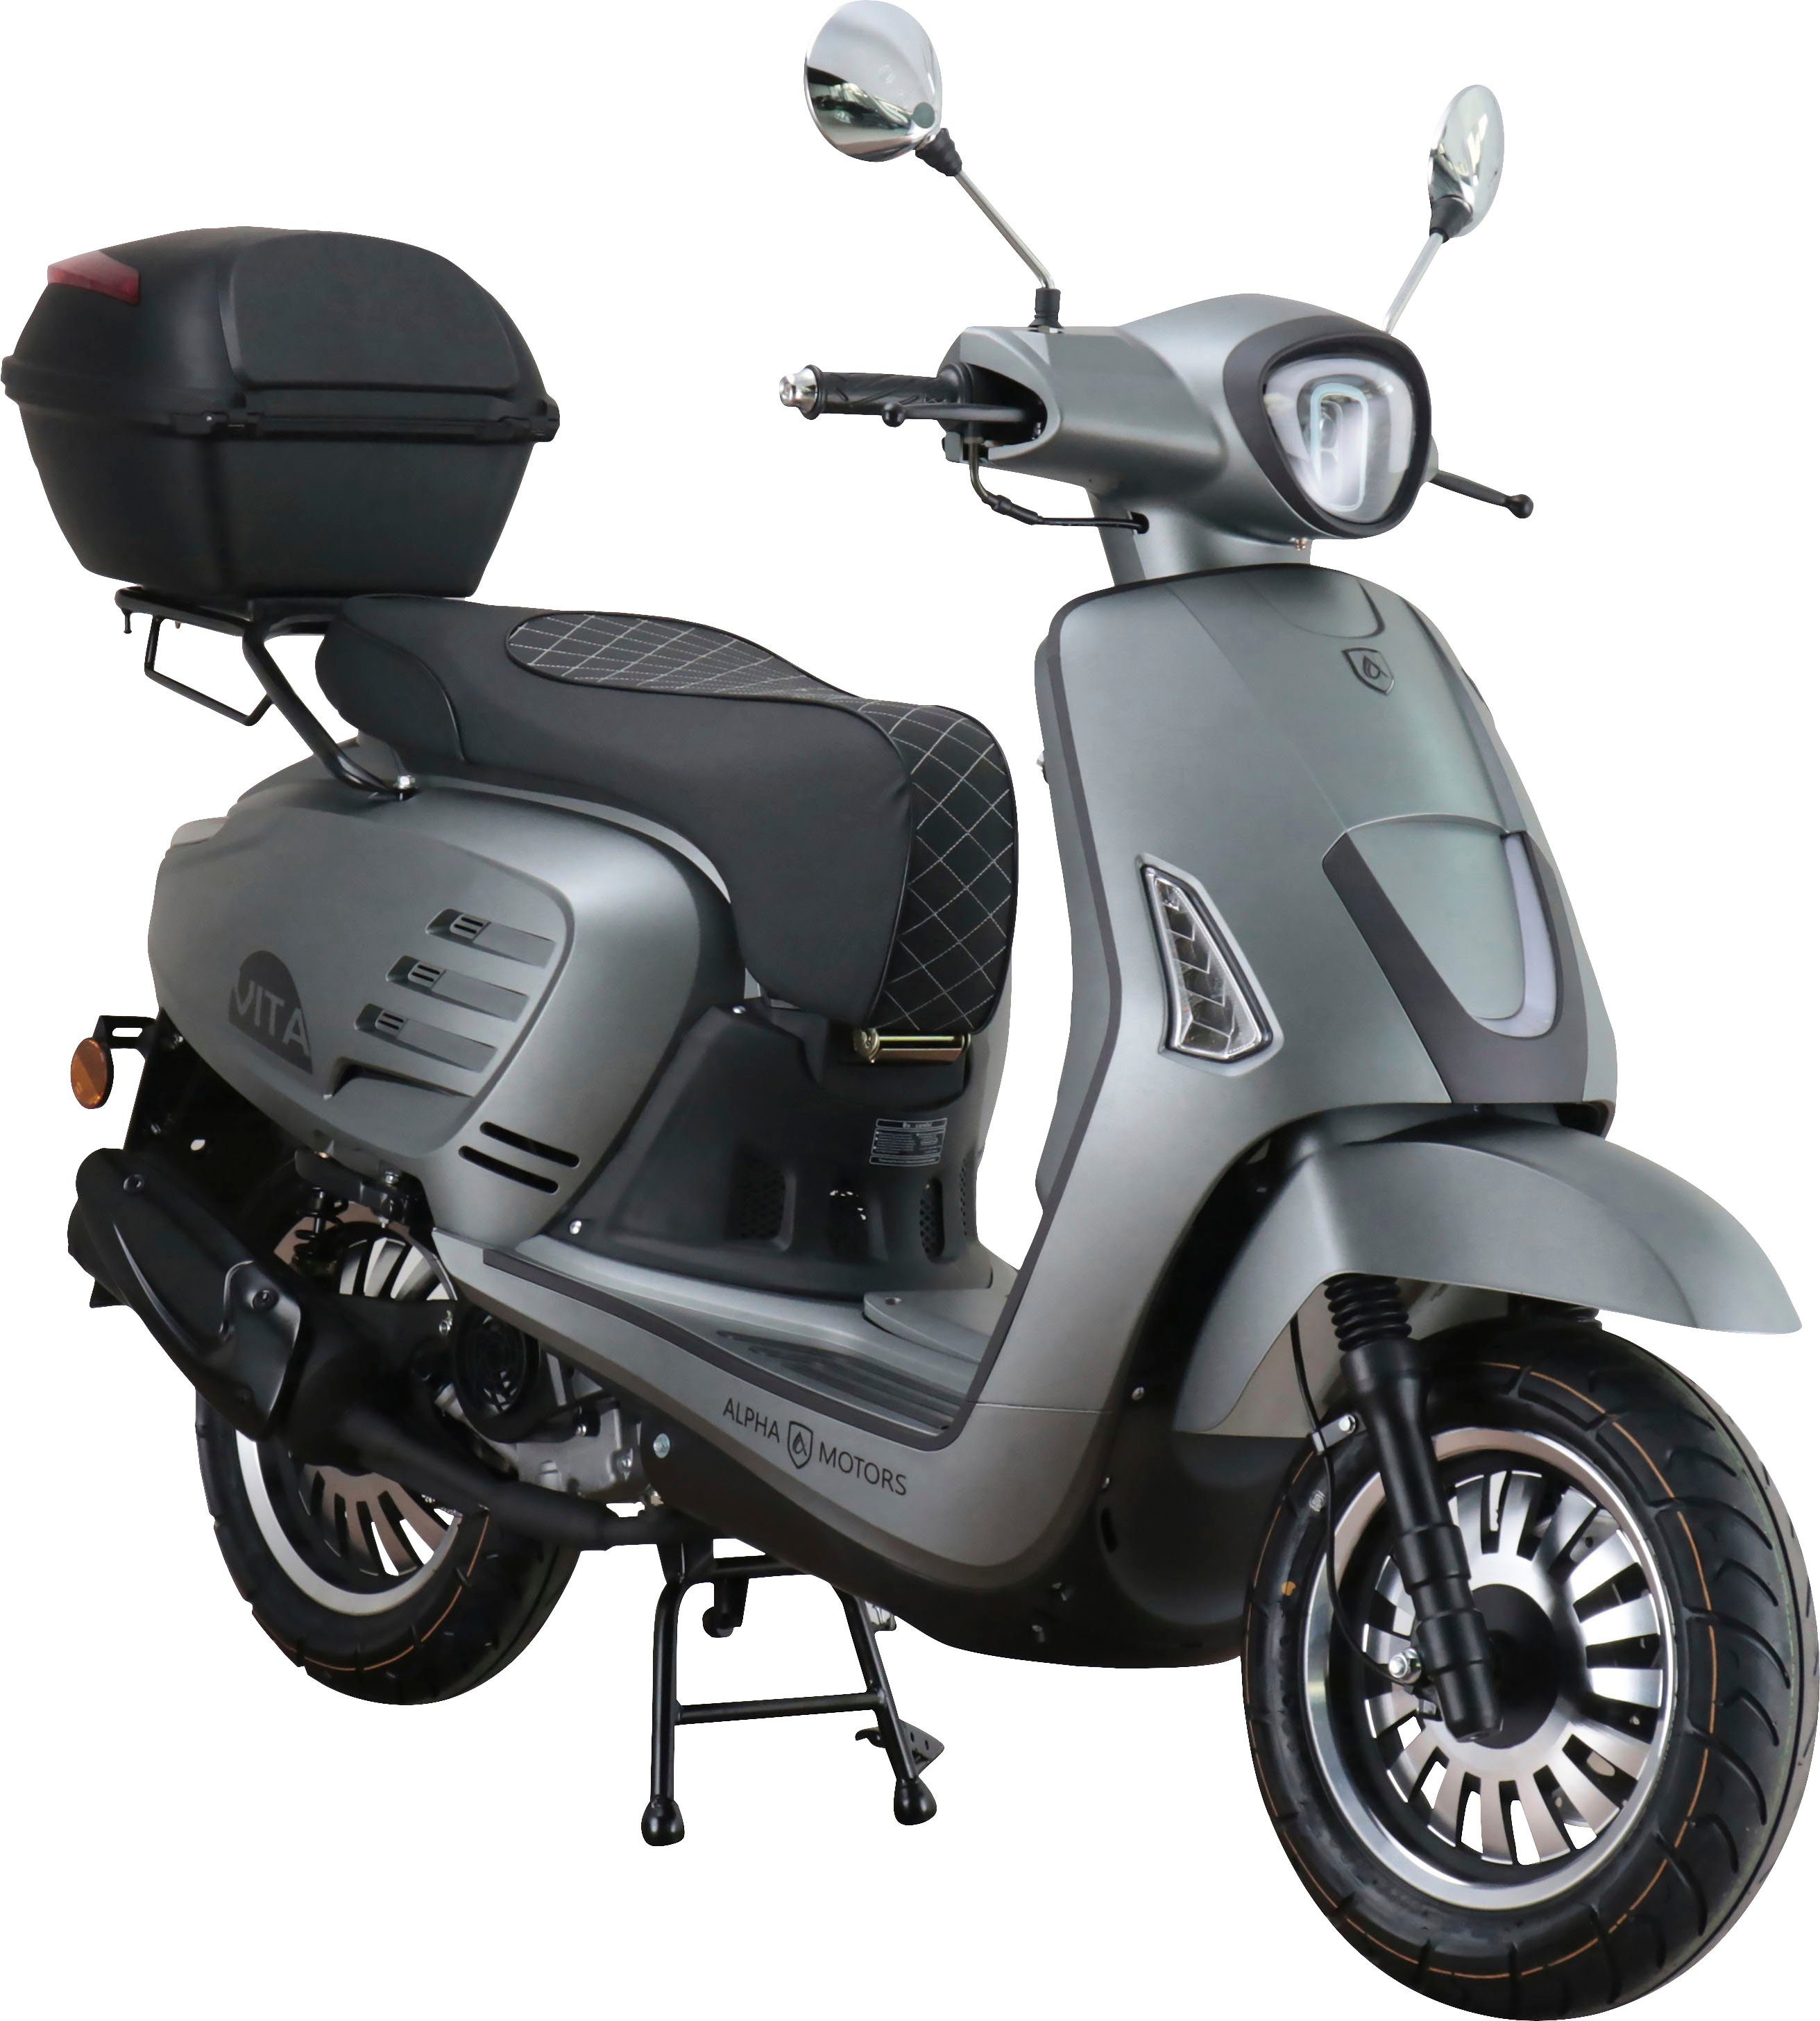 Alpha Motors Motorroller Vita, 125 ccm, 85 km/h, Euro 5, inkl. Topcase | Motorroller